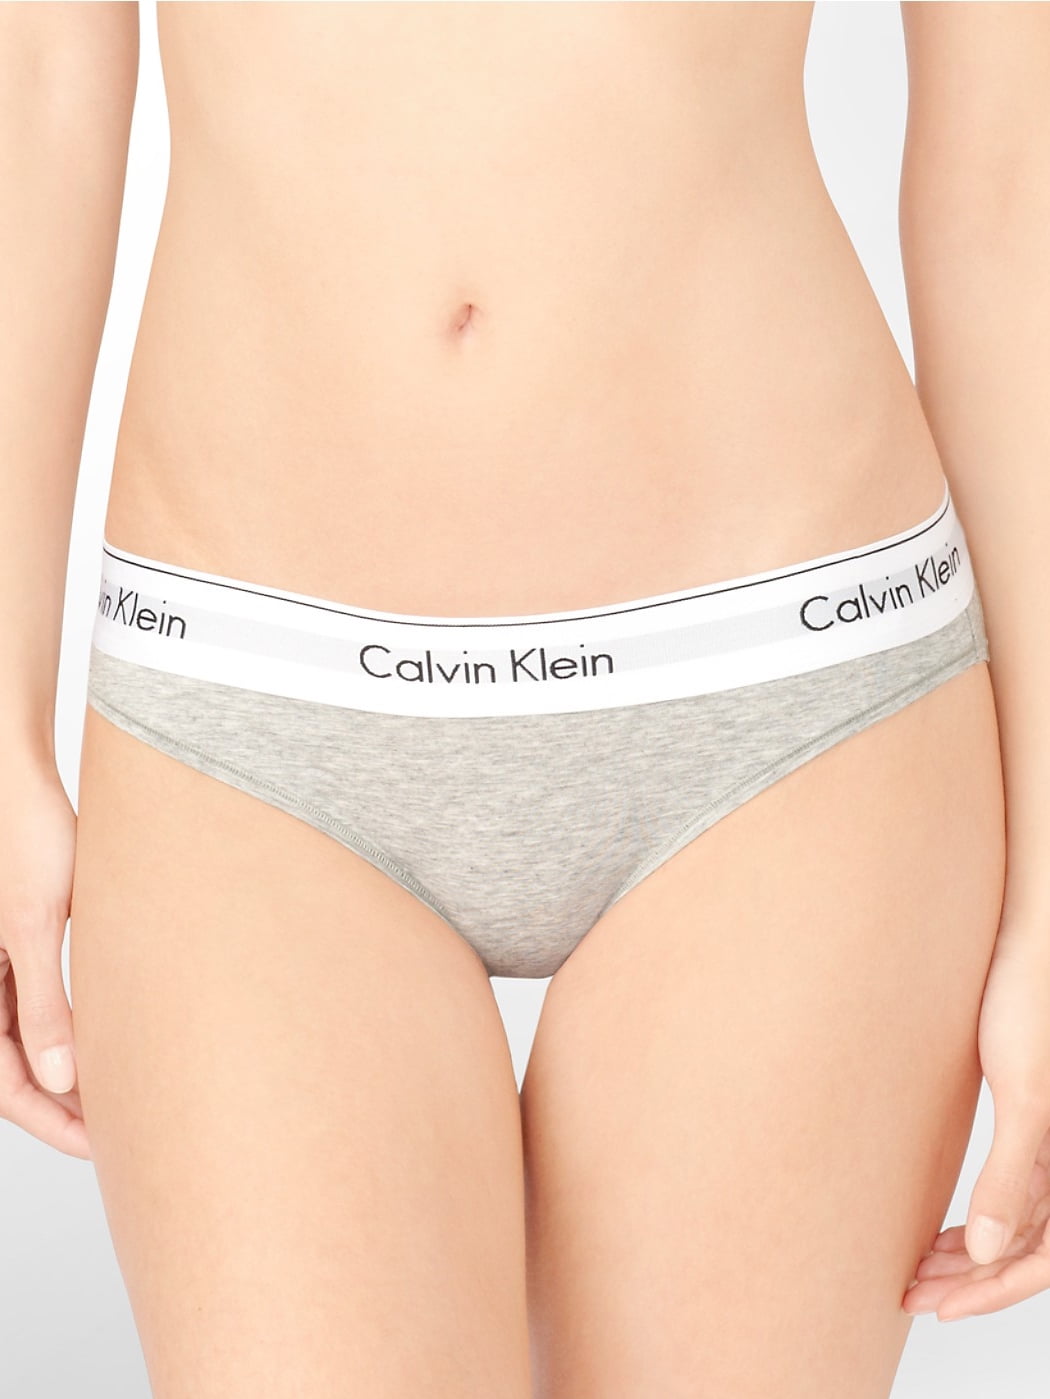 Calvin Klein Women's Modern Cotton Bikini, Grey Heather, Small